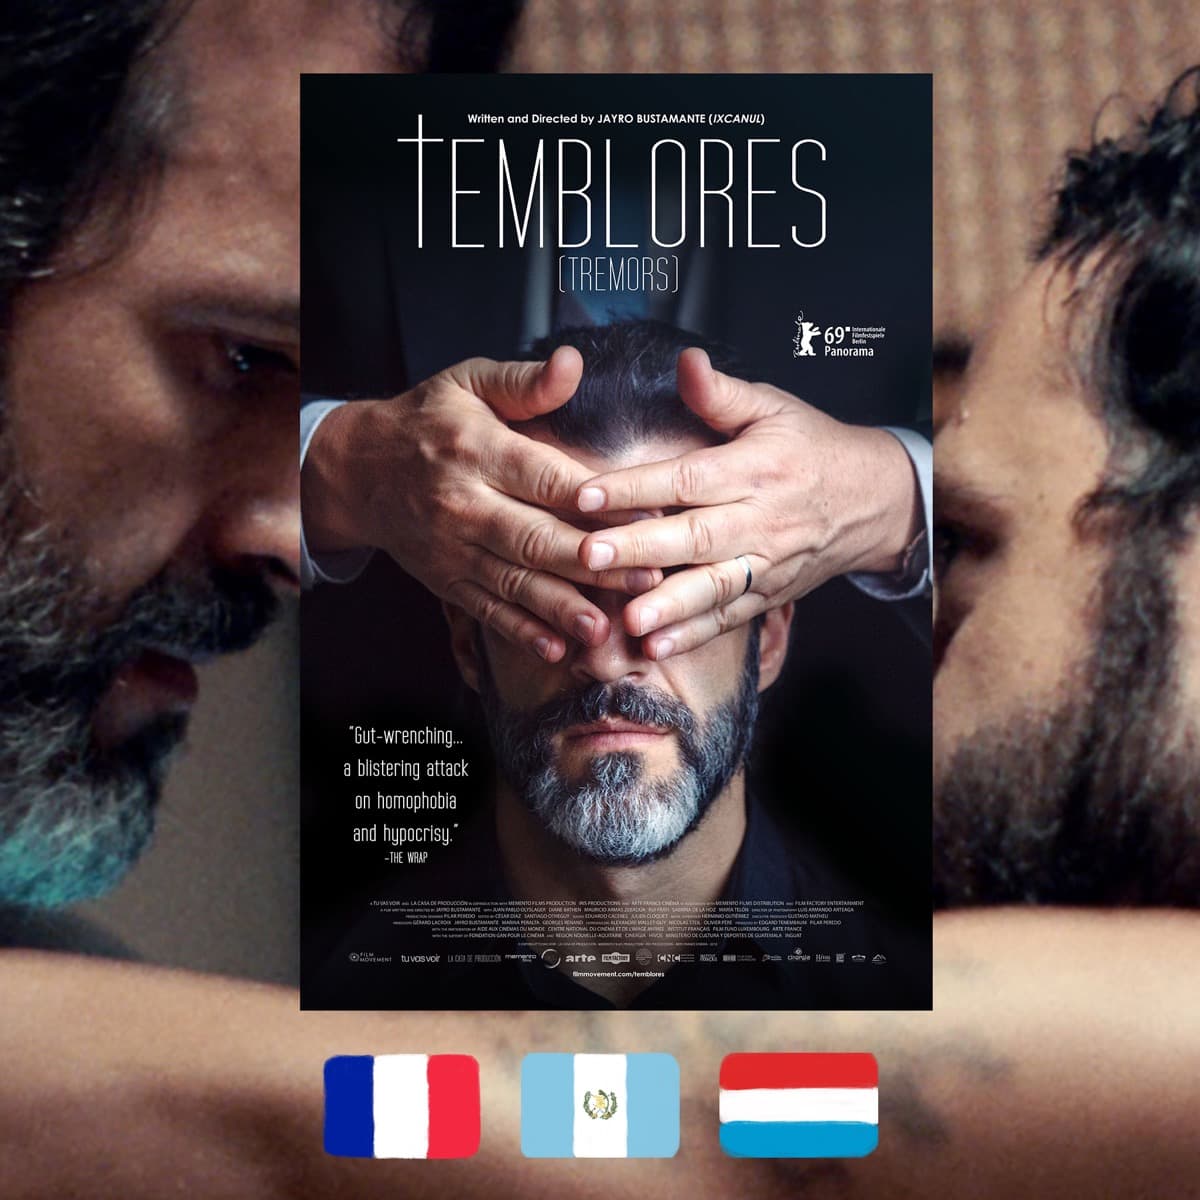 Temblores, Jayro Bustamante, movie poster